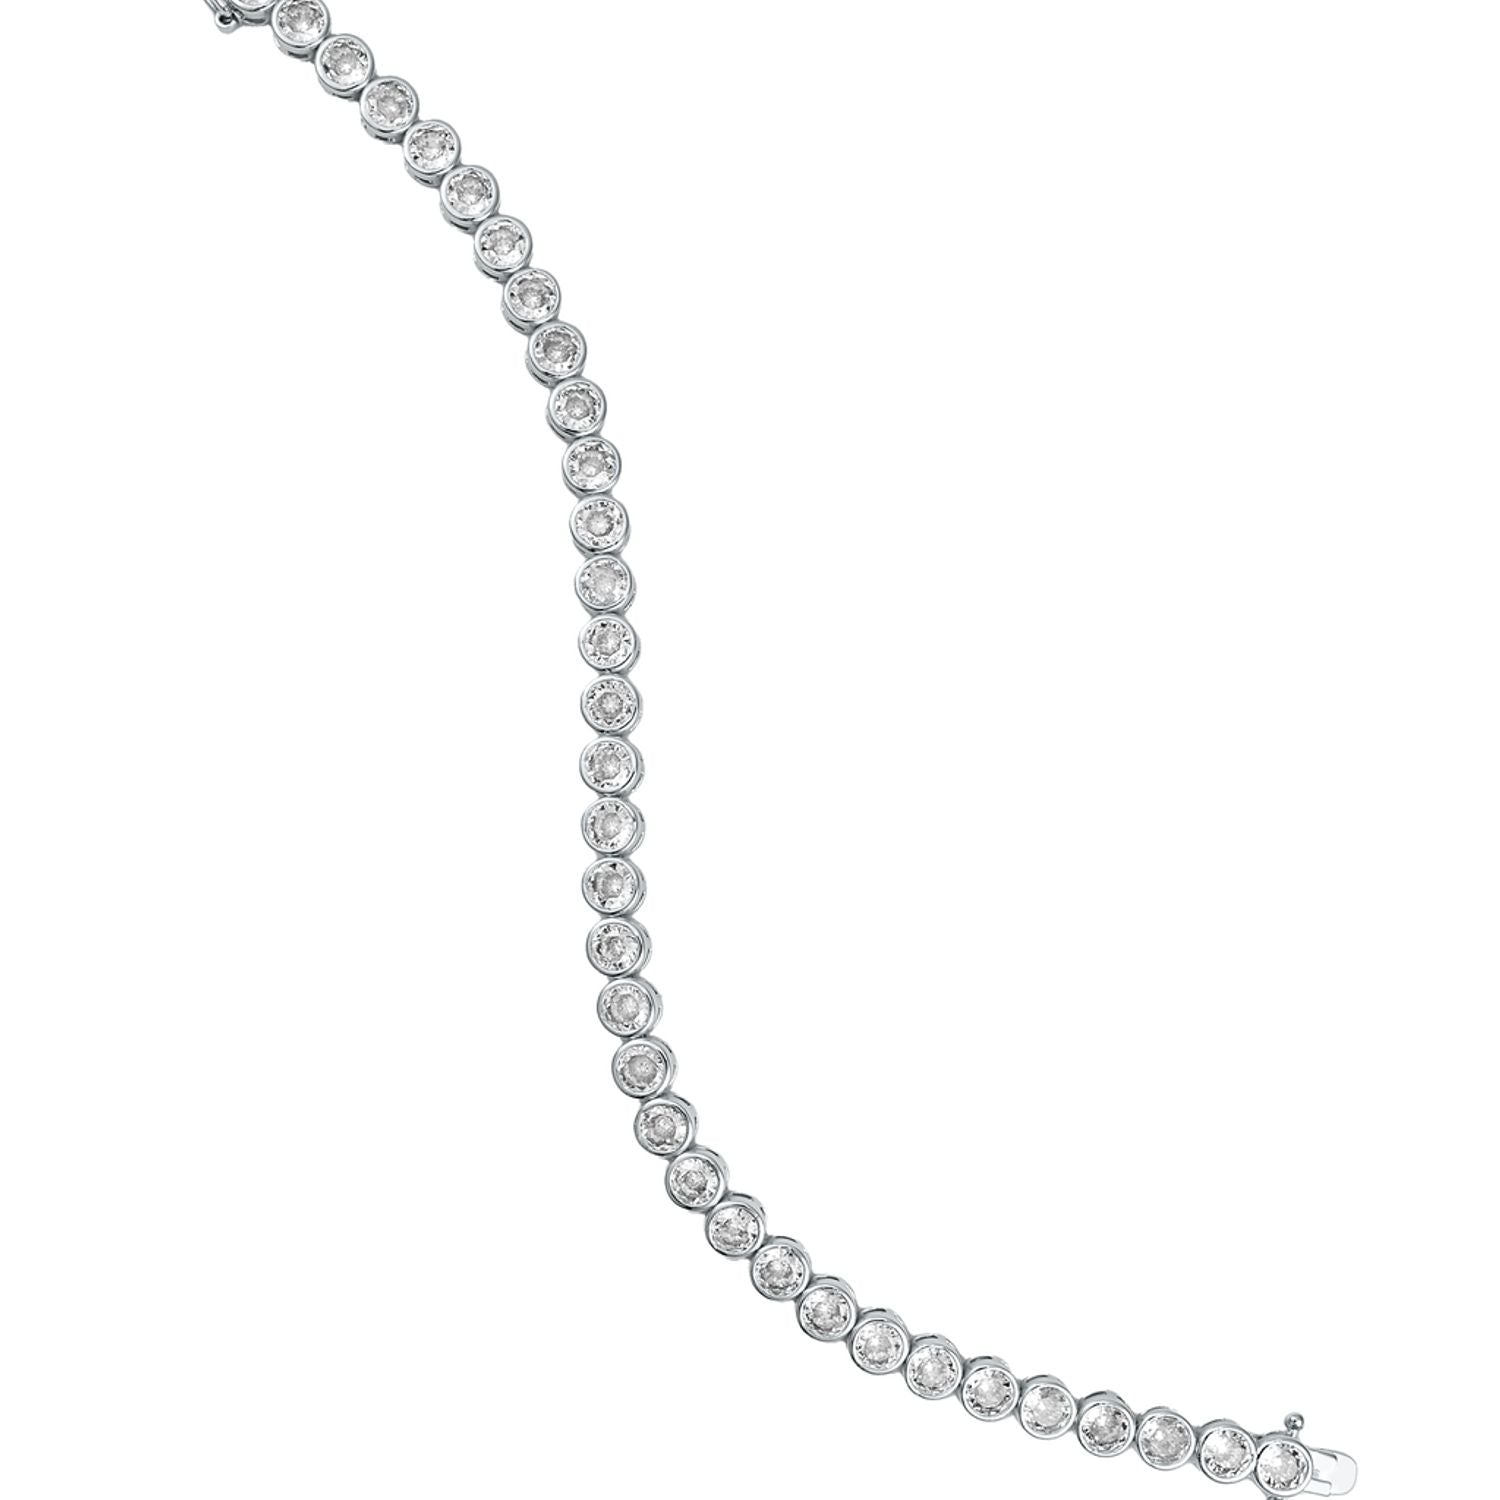 5mm Round Bezel Tennis Necklace with Cubic Zirconia Stones (H104)(I453)